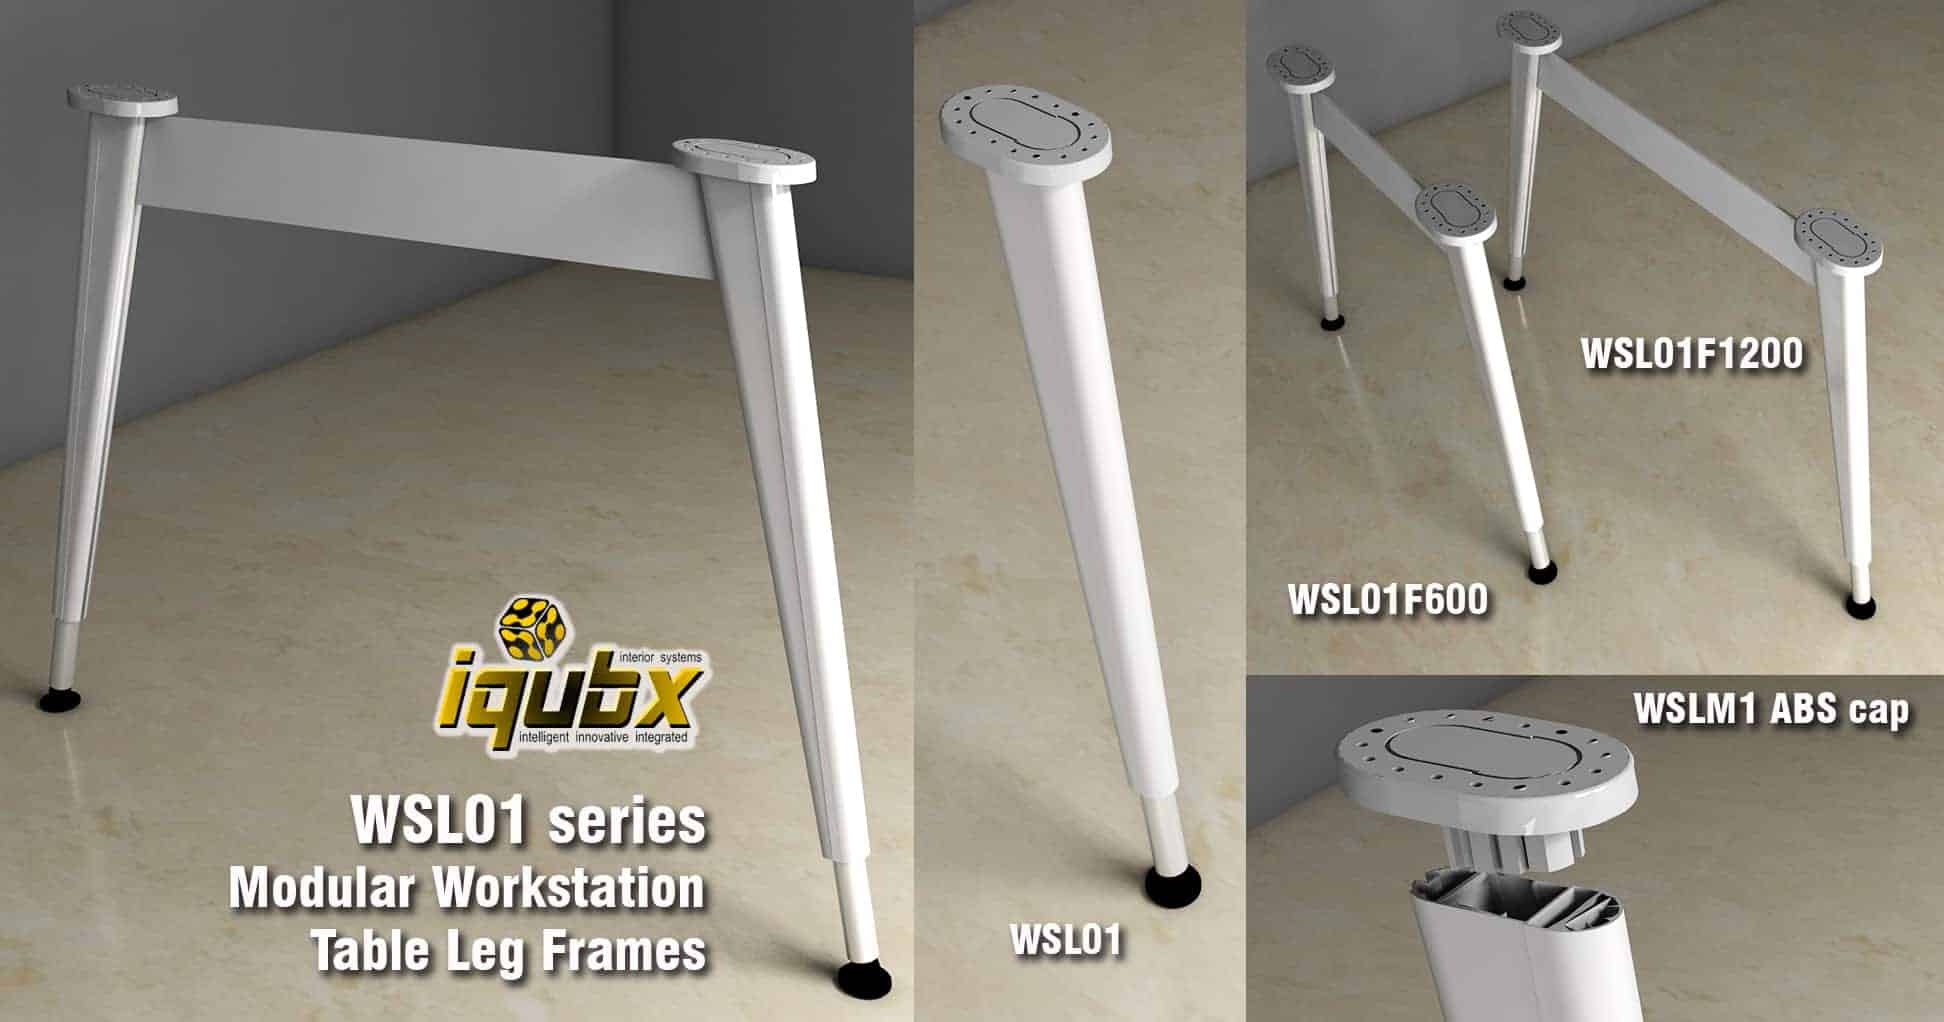 Iqubx modular workstation table leg and leg frames